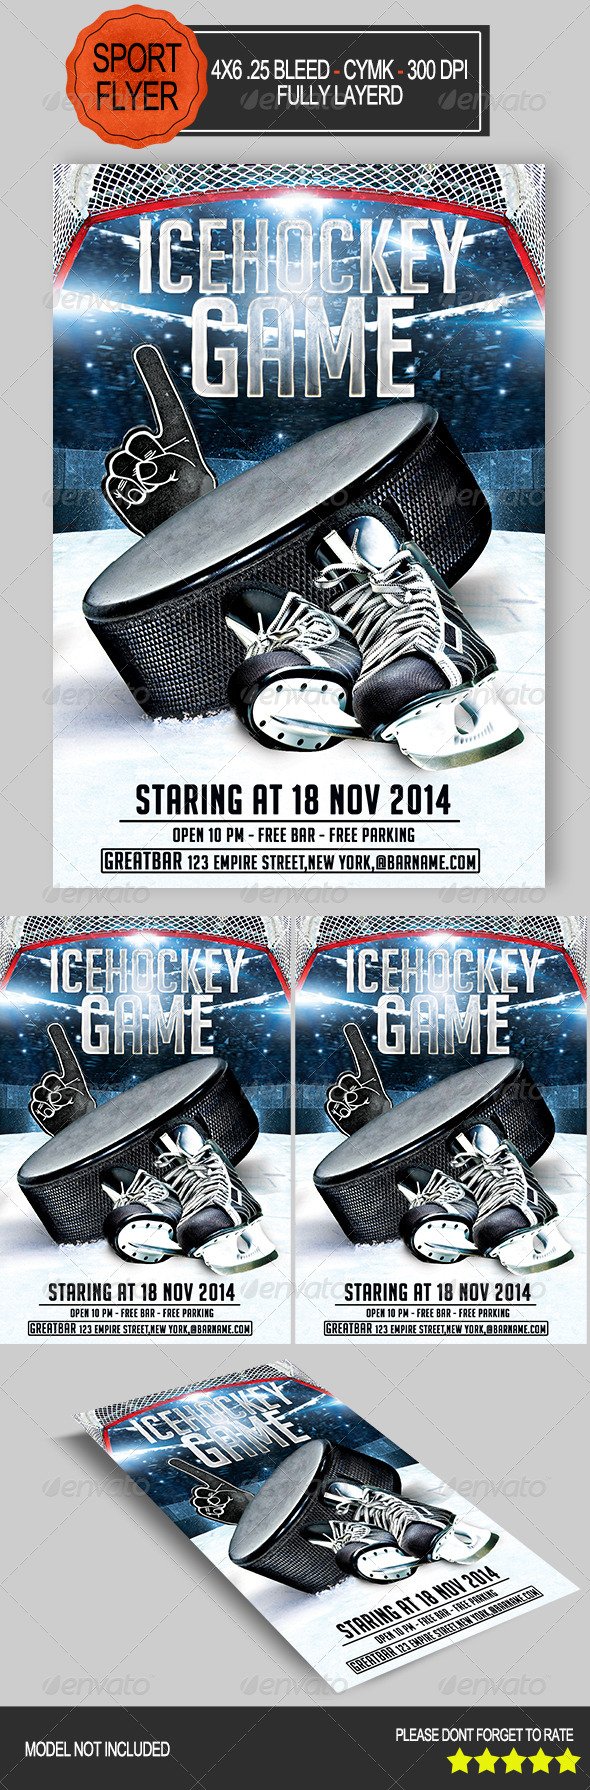 Ice Hockey Game Flyer (Sports)